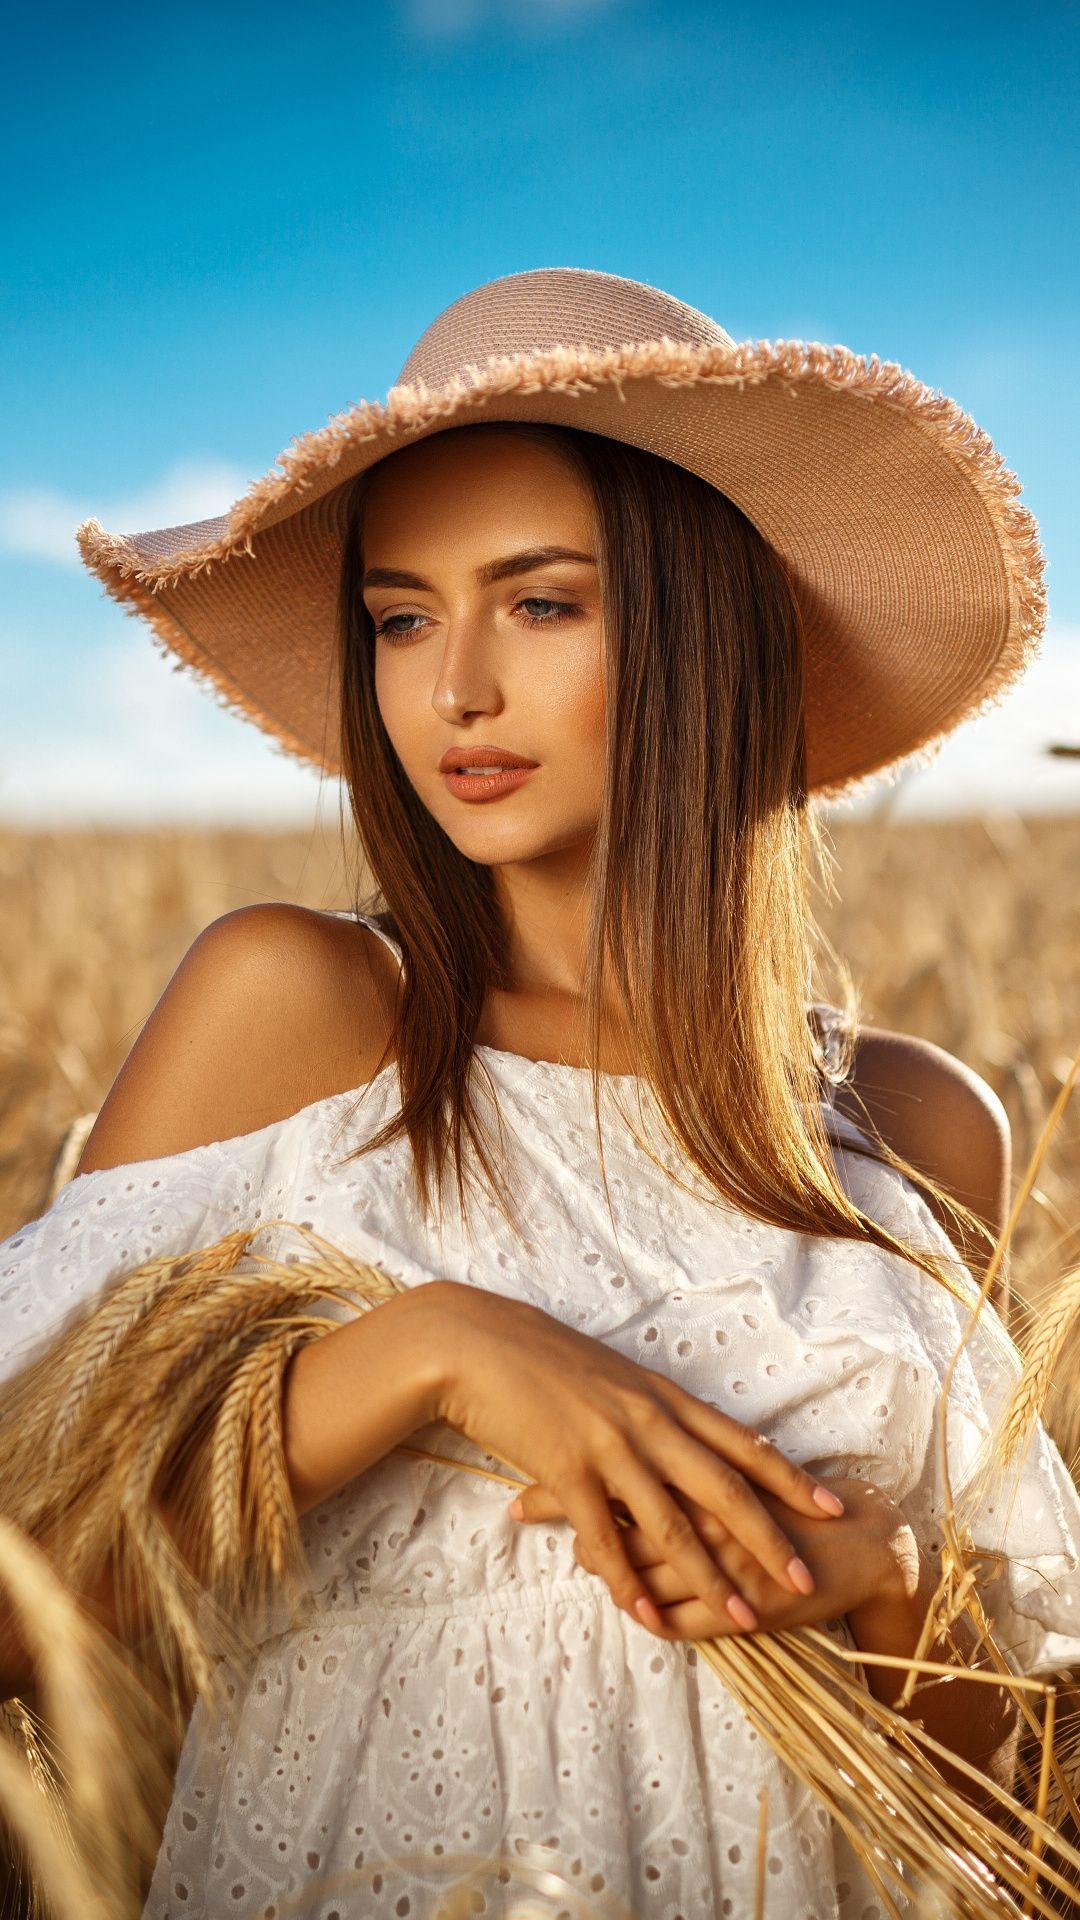 Beautiful, woman, straw hat, outdoor, wheat farm, 1080x1920 wallpaper. Photography poses women, Photography women, Girl photography